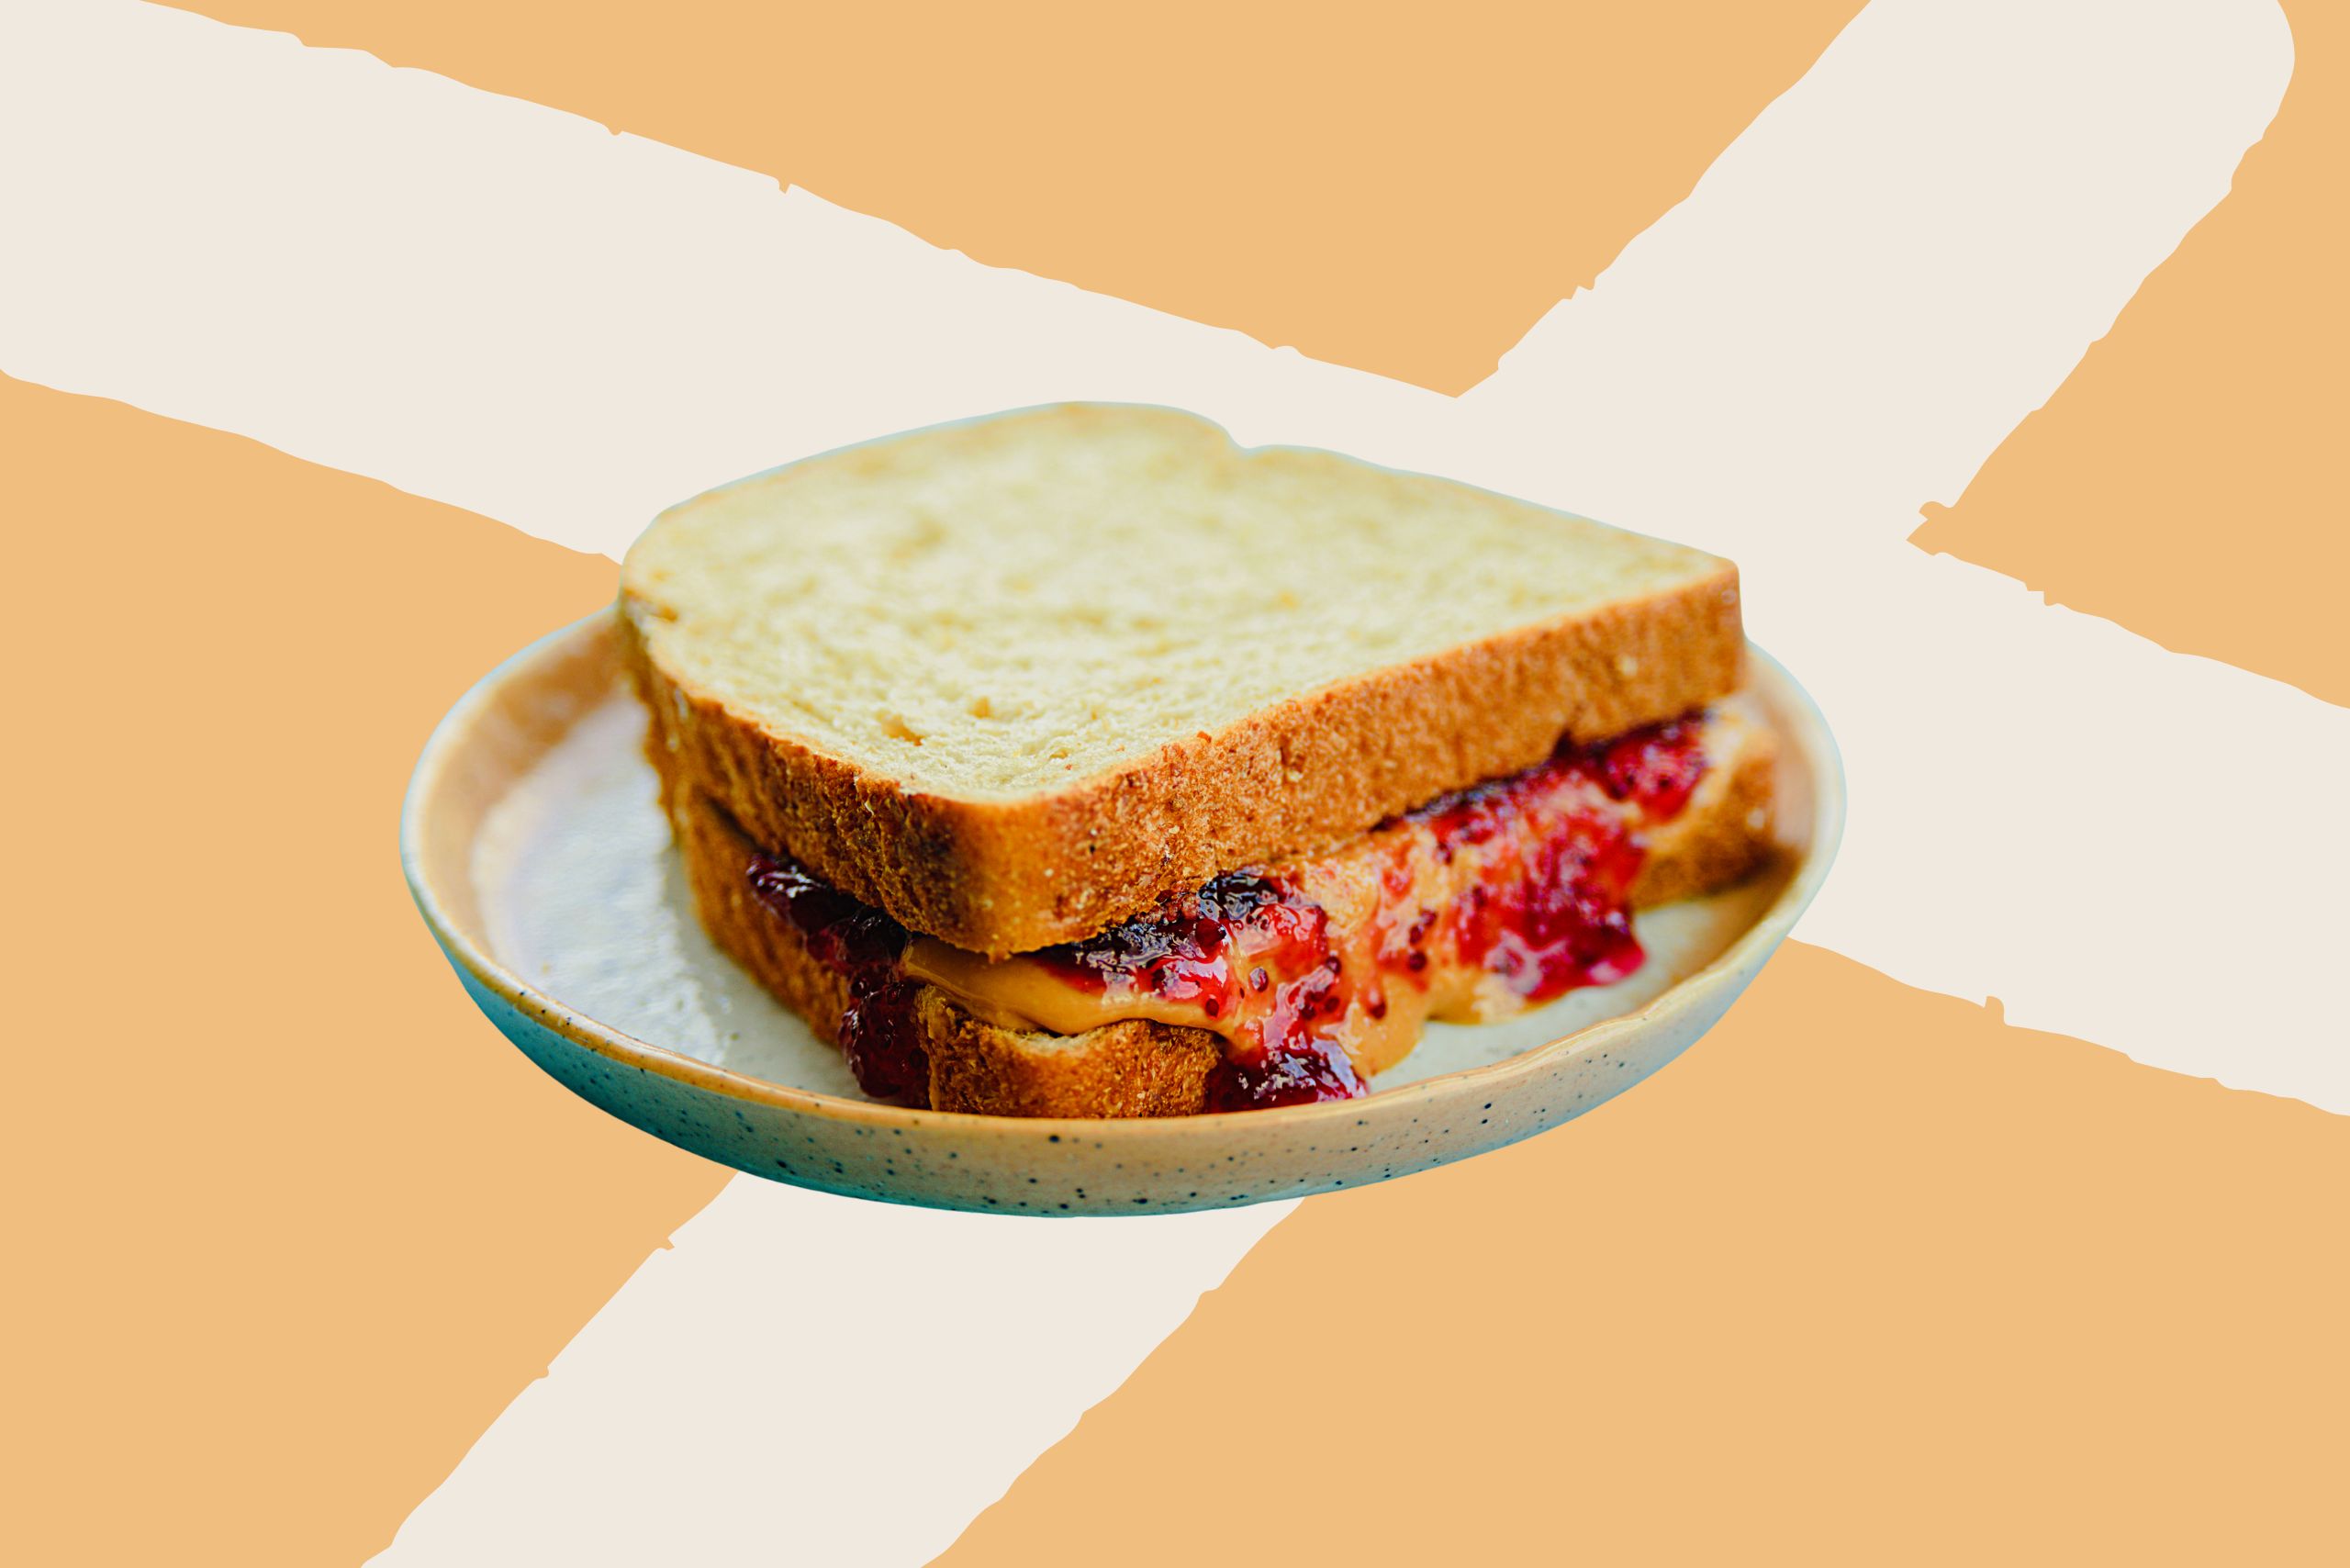 peanut butter and jam sandwich - Ideal Magazine